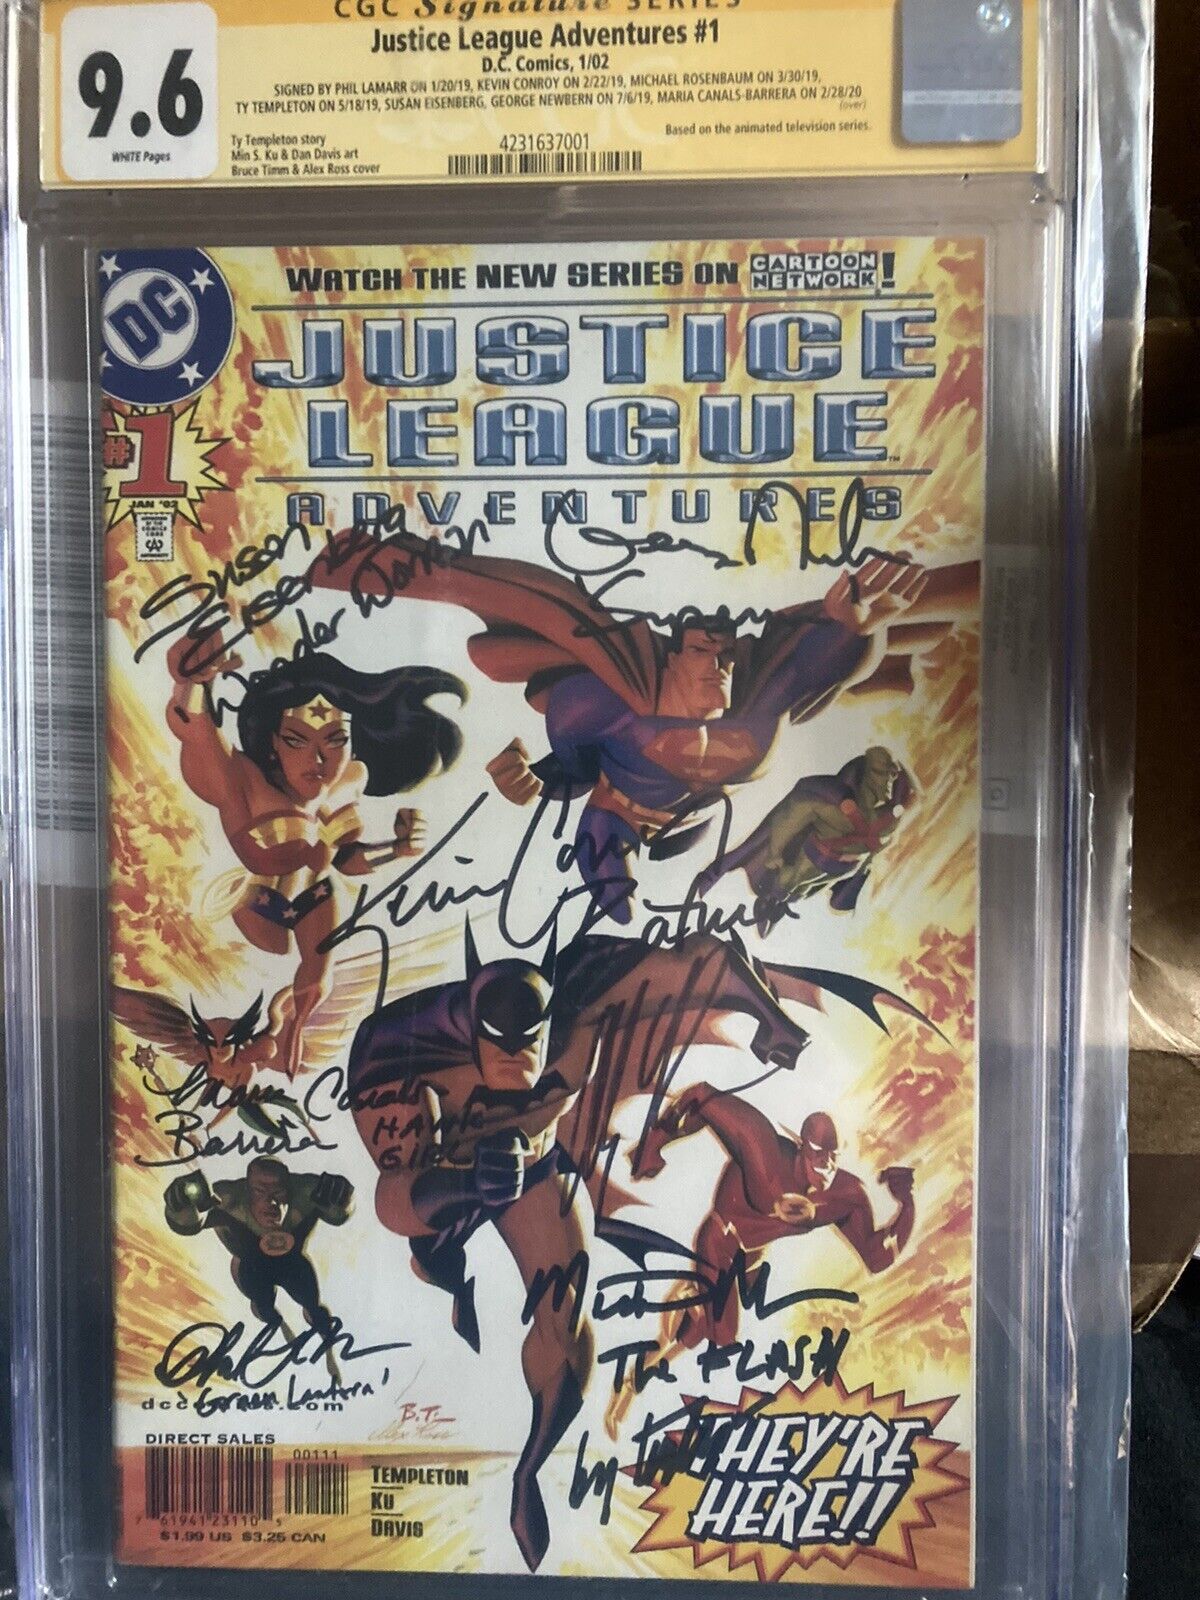 Justice League Adventures #1 (DC) CGC Signed X8 Conroy/Newbern/Alex Ross/LaMarr+